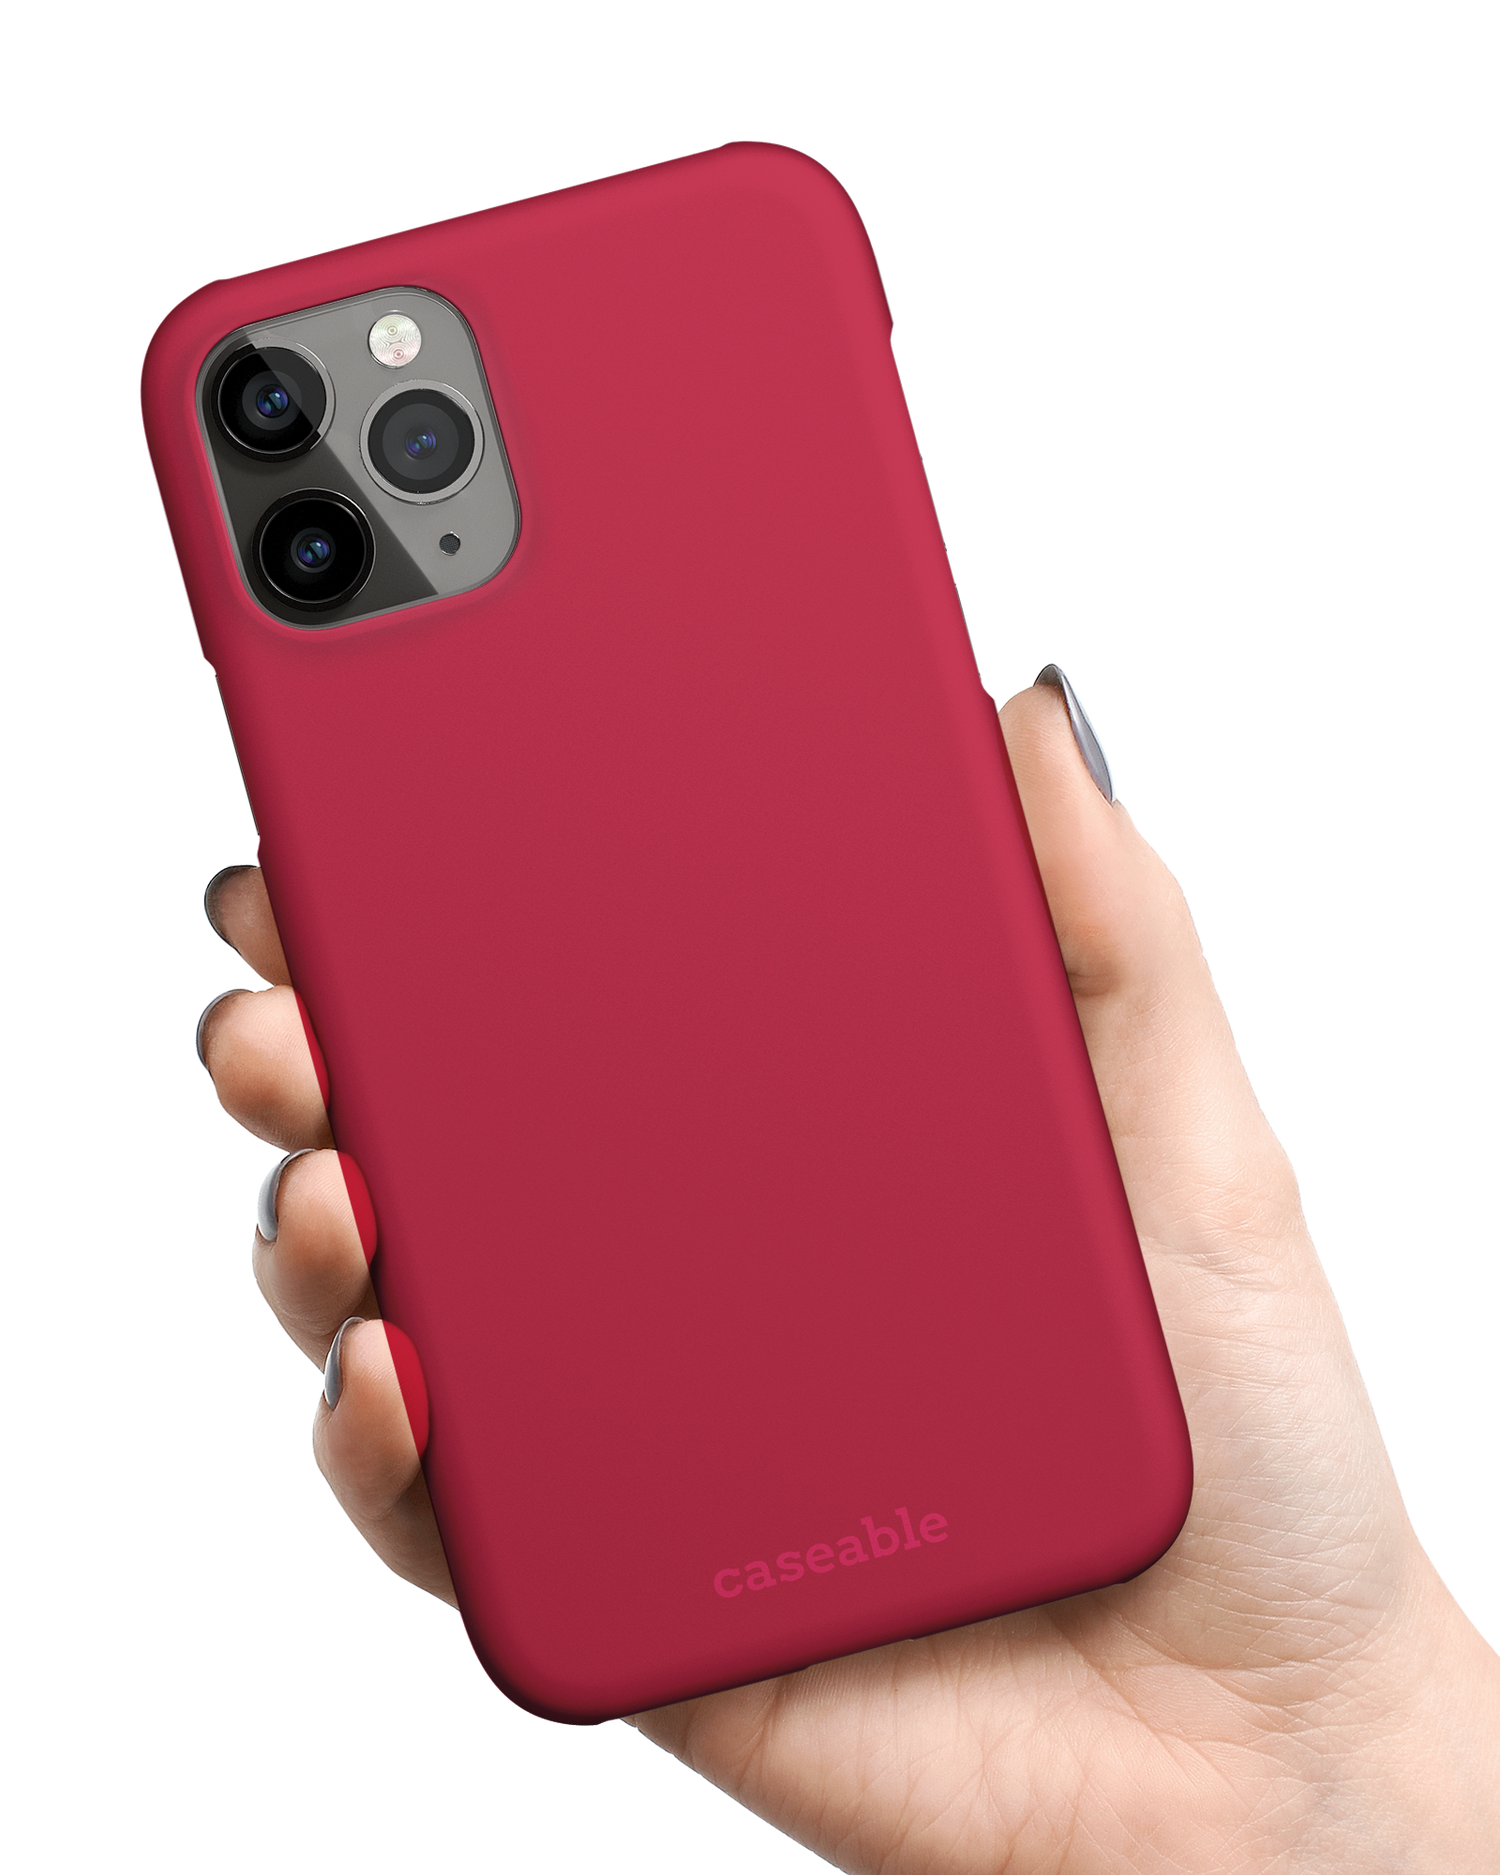 RED Hardcase Handyhülle Apple iPhone 11 Pro Max in der Hand gehalten